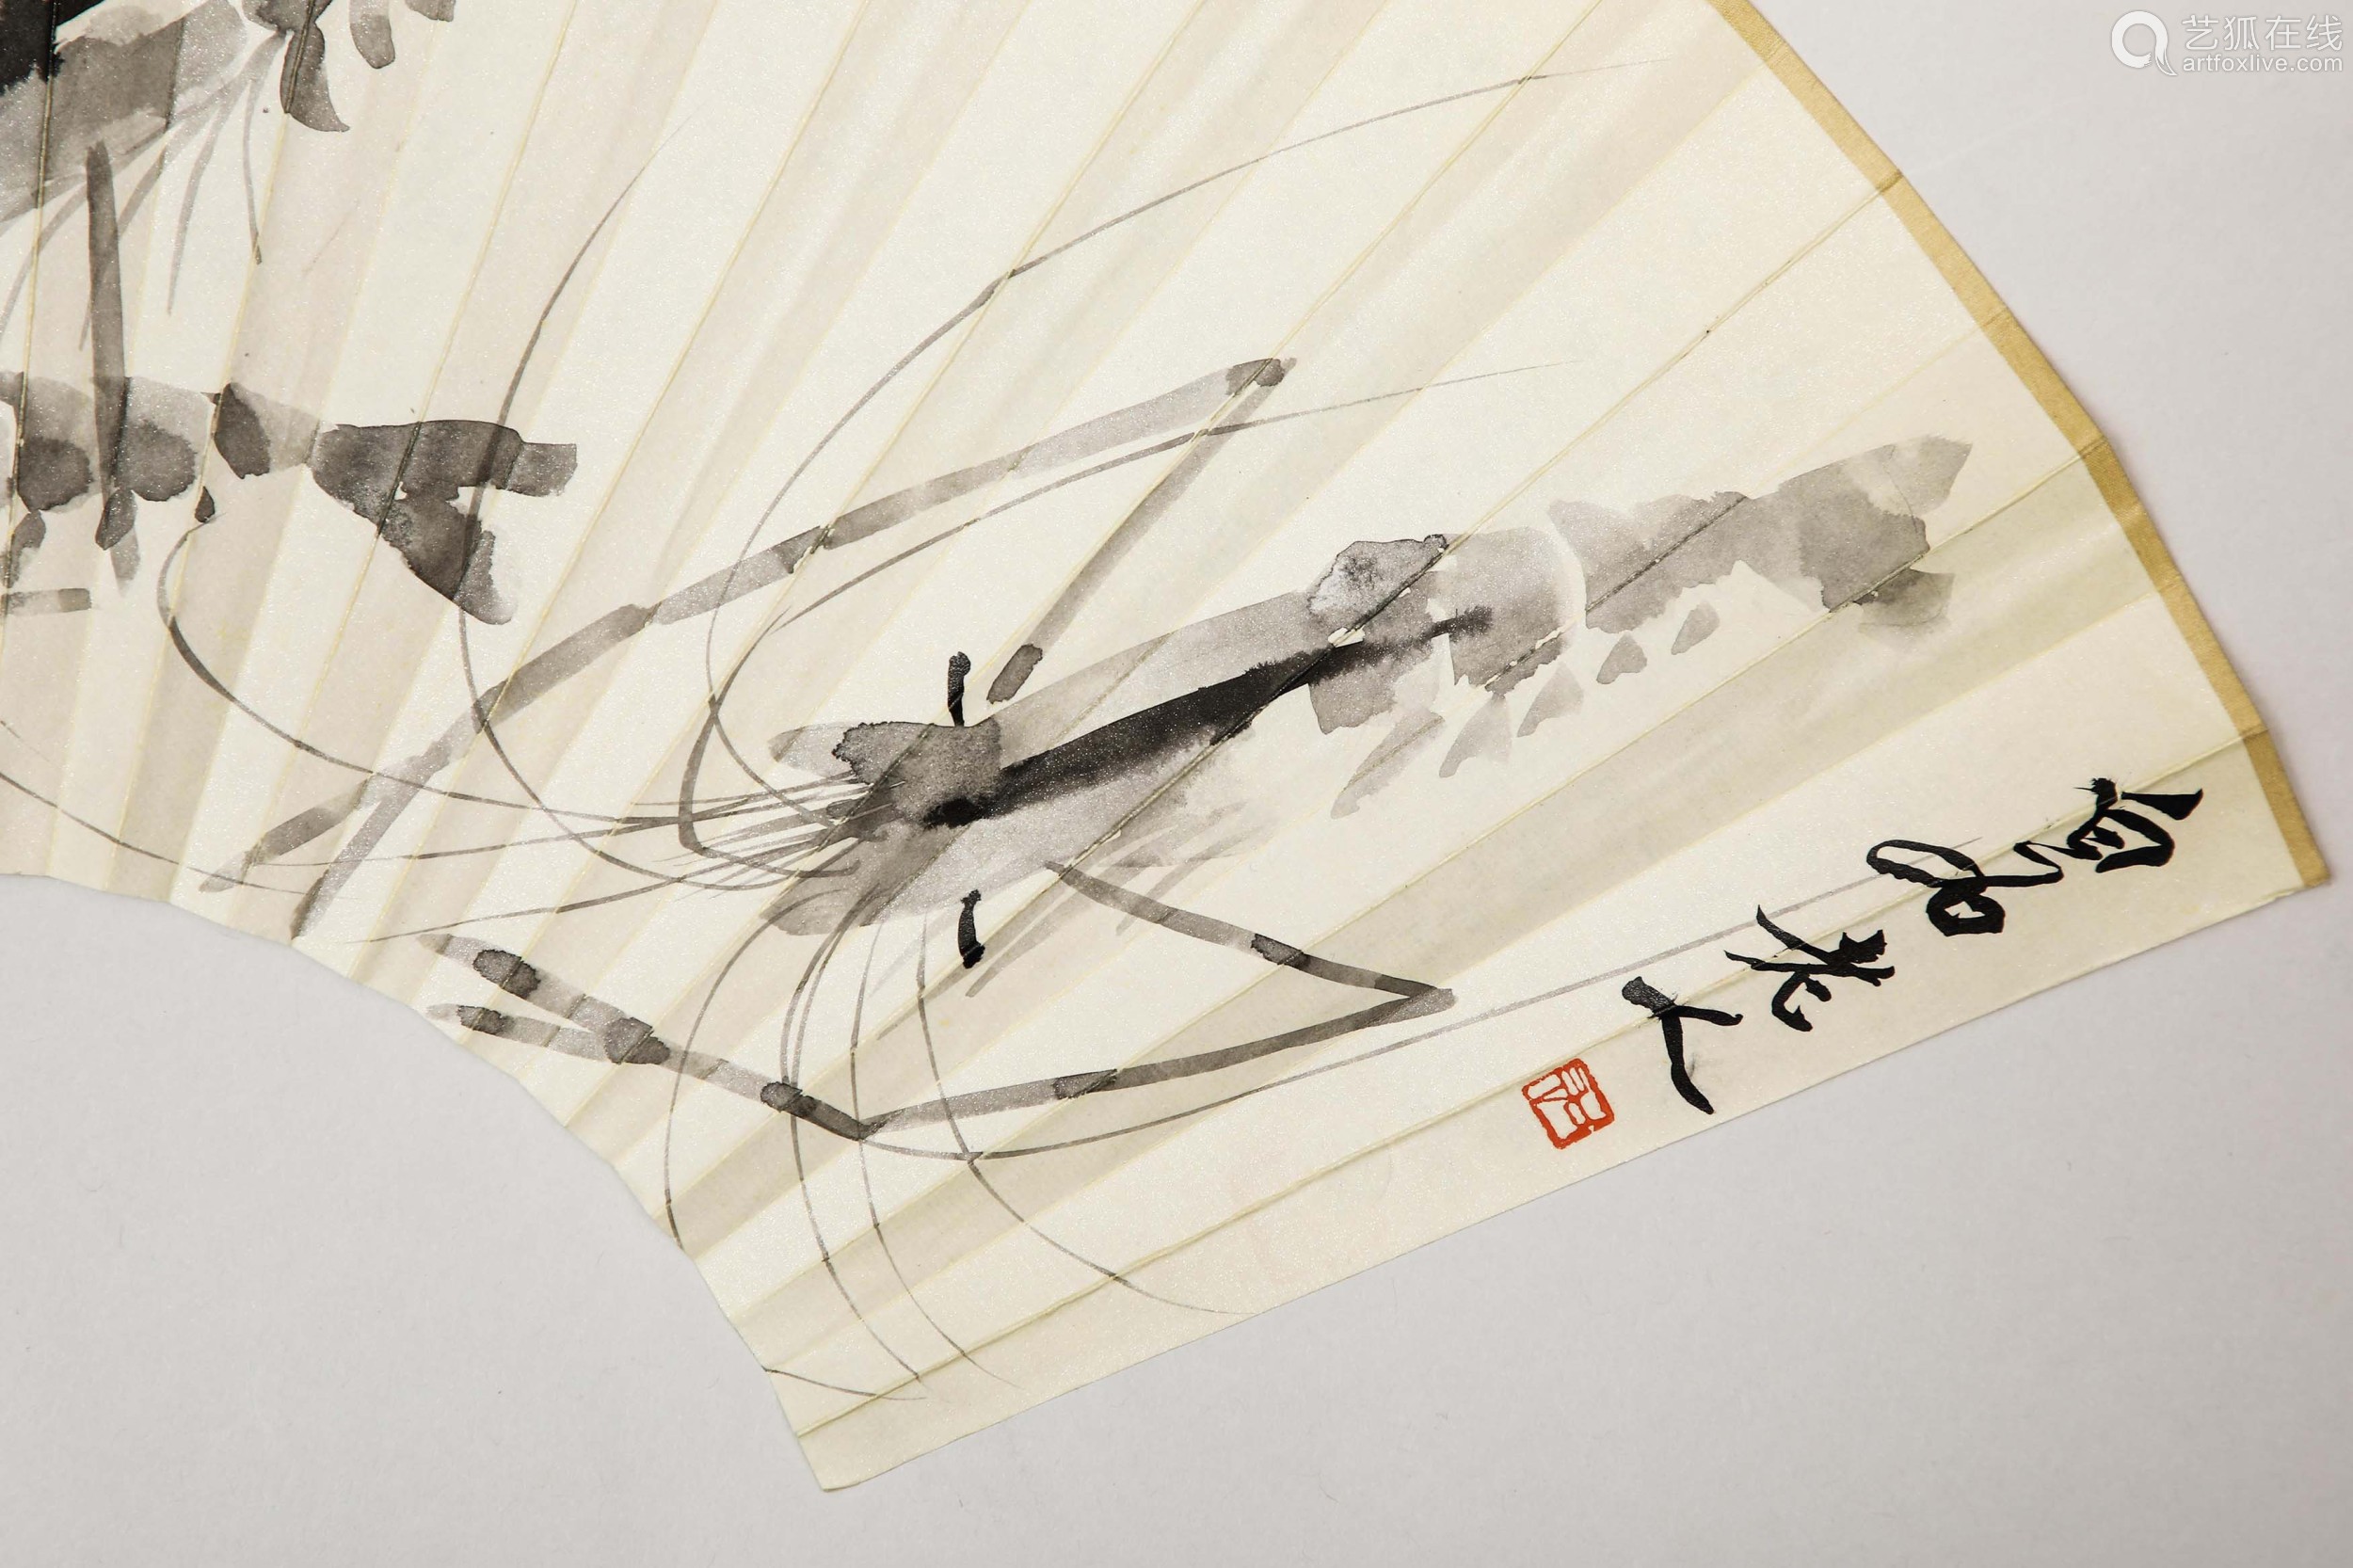 Chinese ink painting,
Qi Baishi's Playing Shrimp Drawing